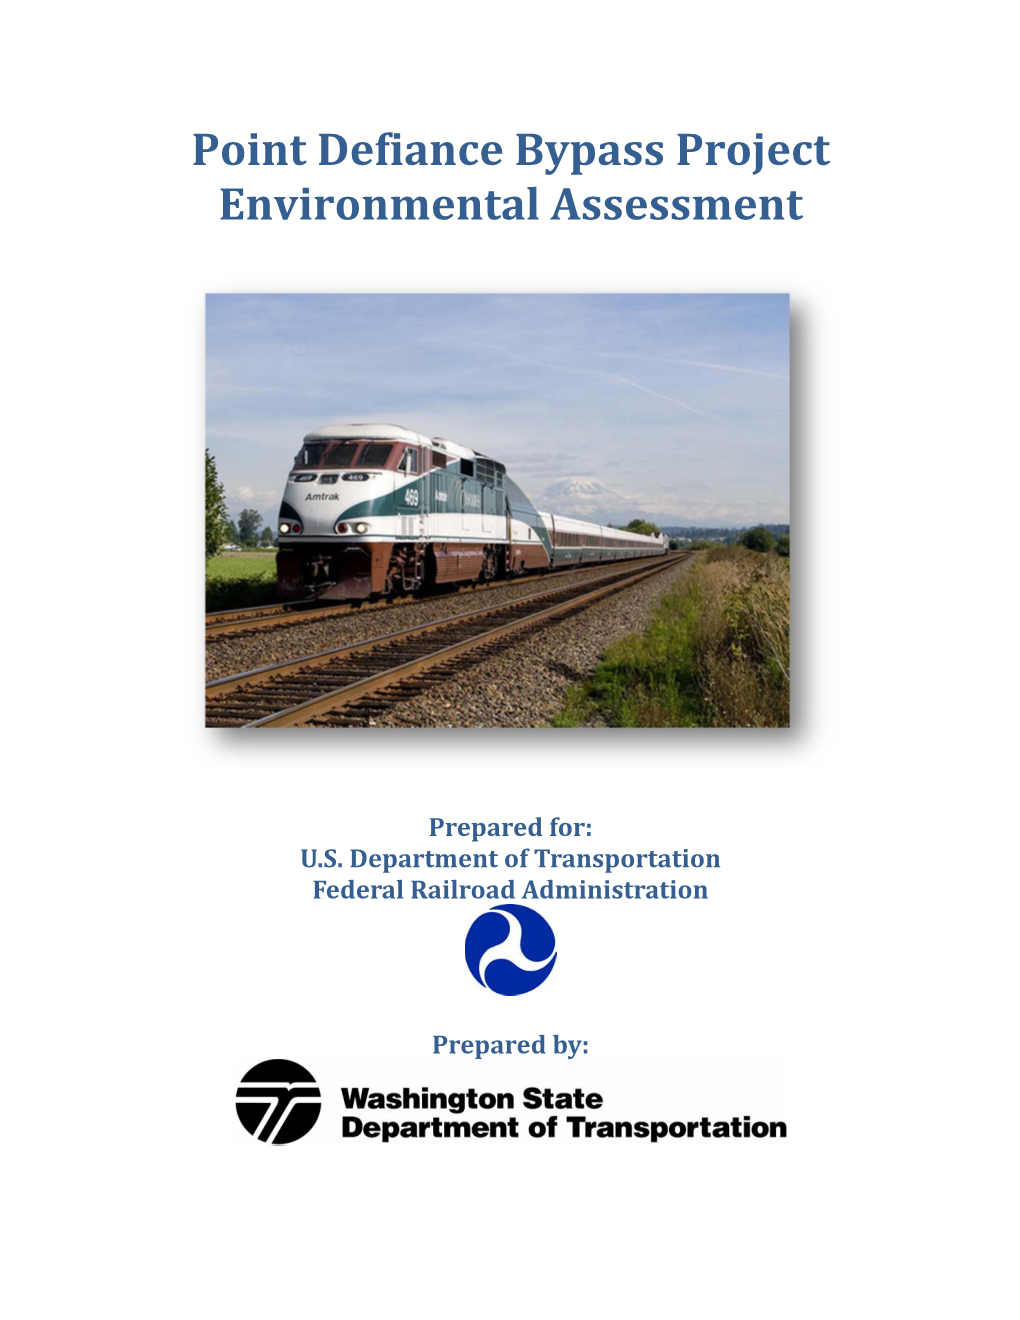 Point Defiance Bypass Project Environmental Assessment